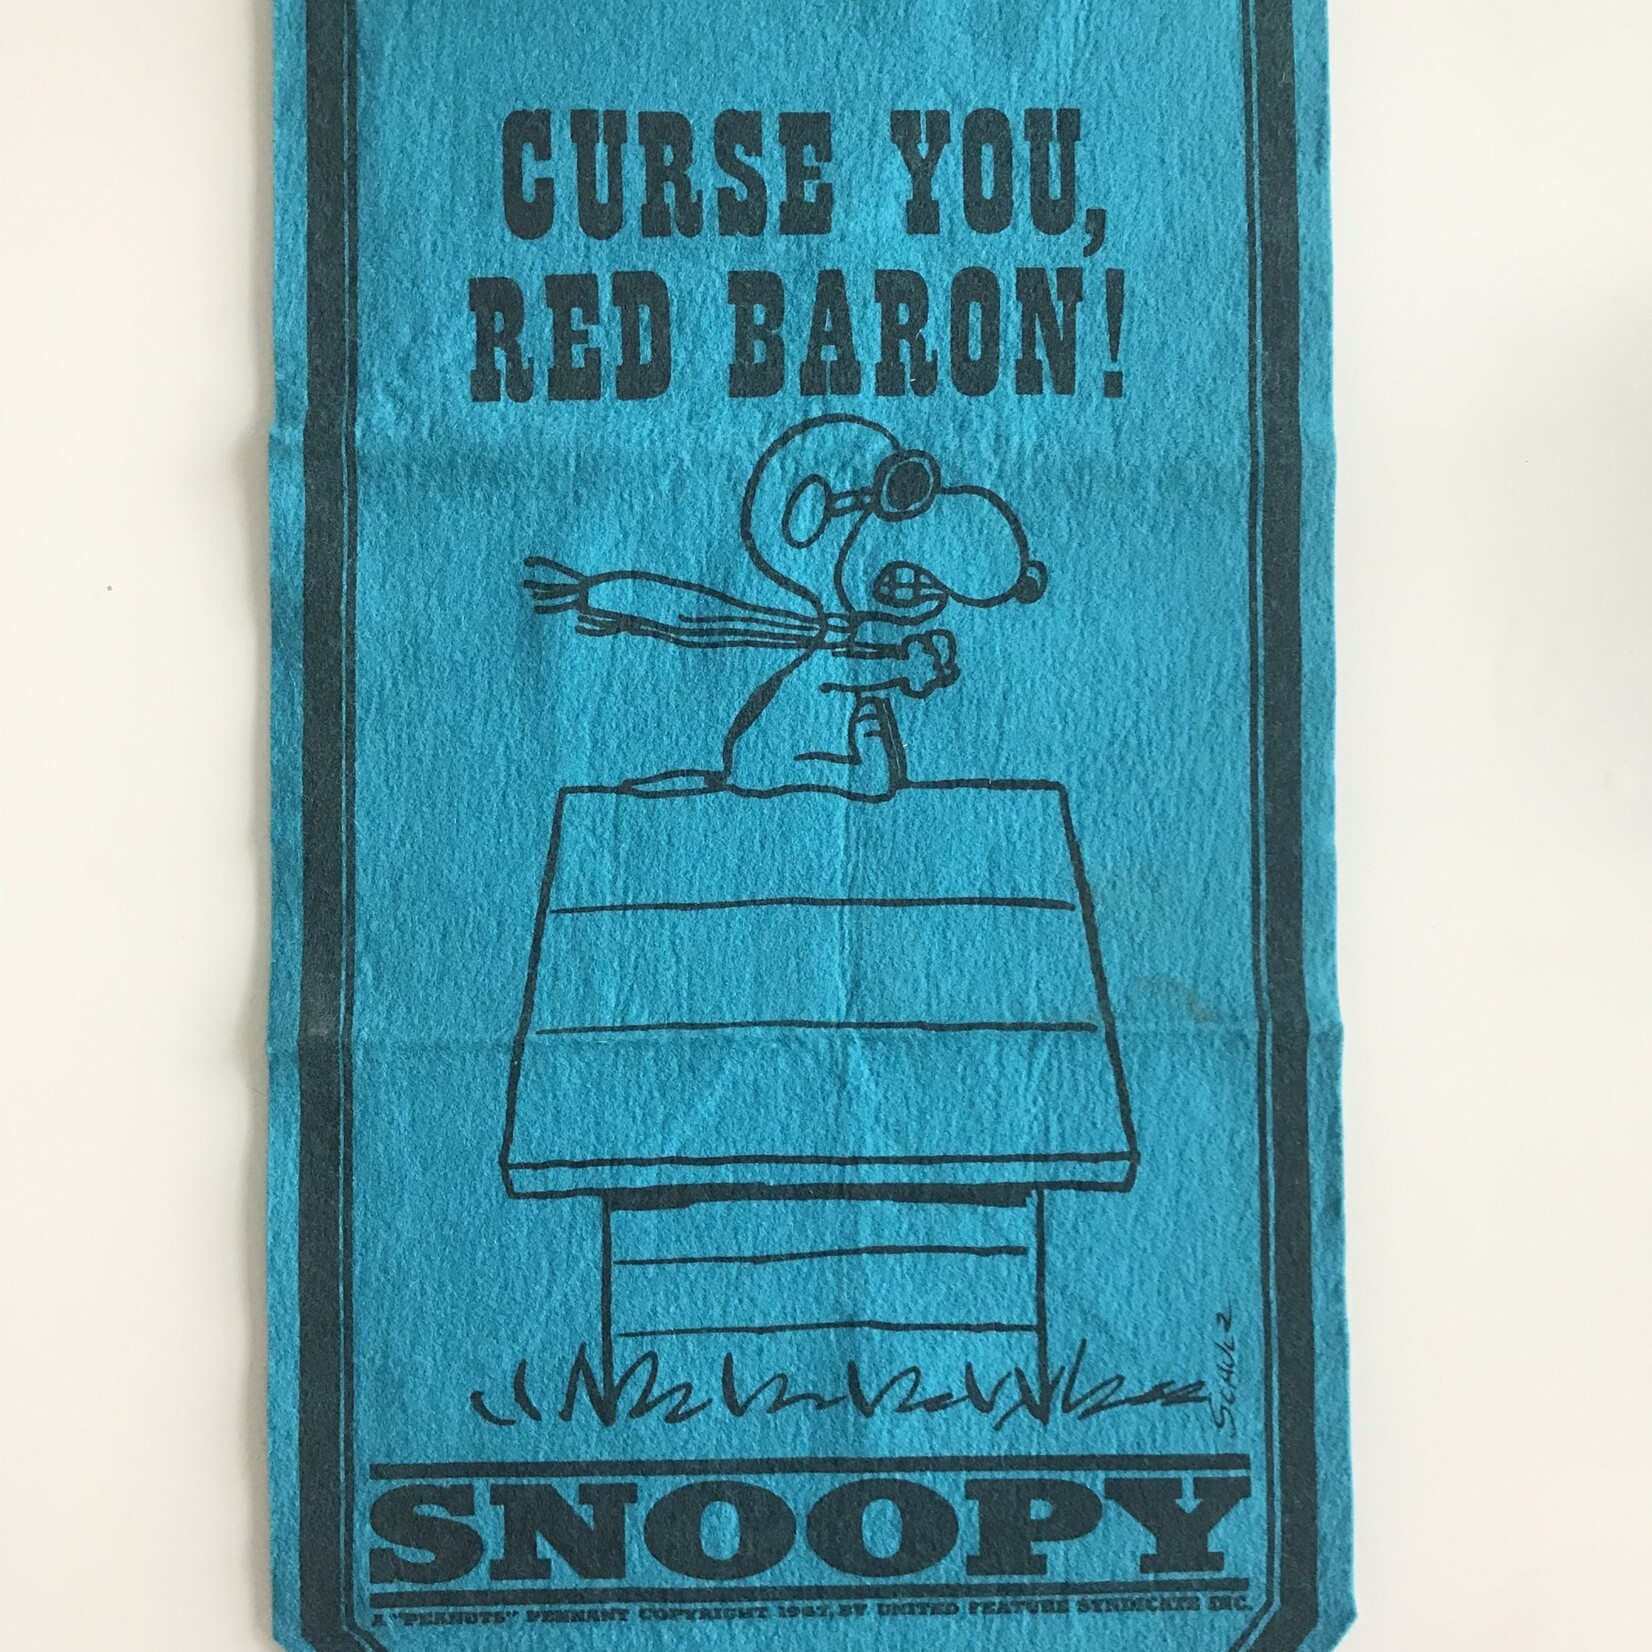 Peanuts - Snoopy “Curse You, Red Baron” - 1967 Blue Felt Pennant (VINTAGE)